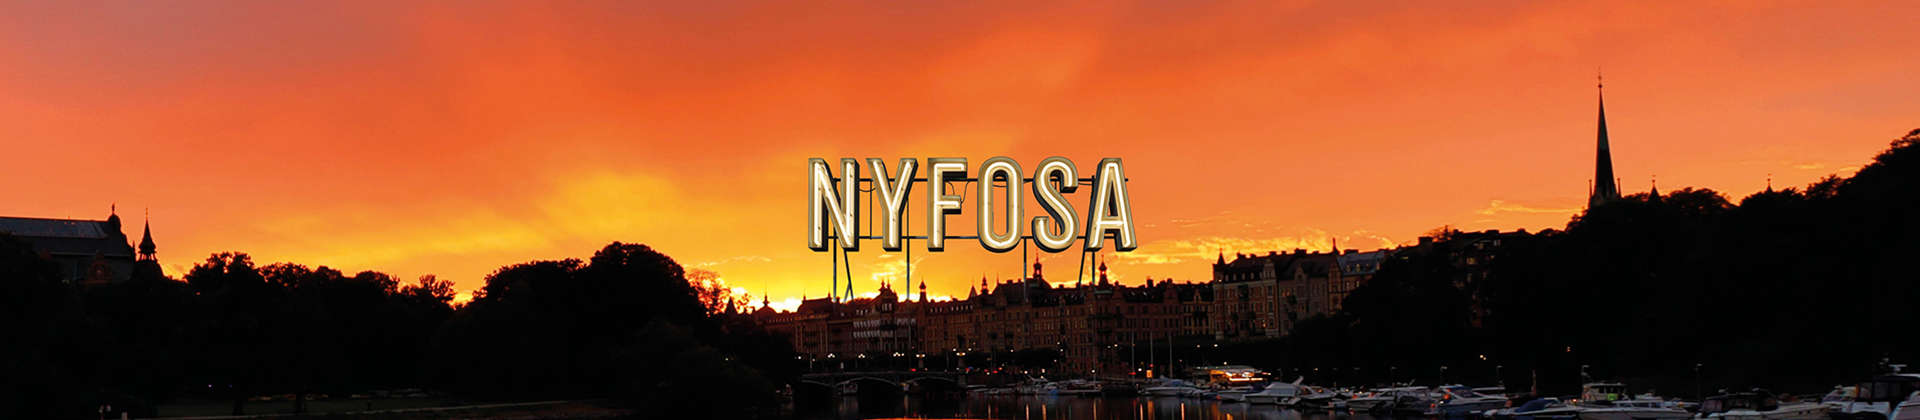 nyfosa-banner-section